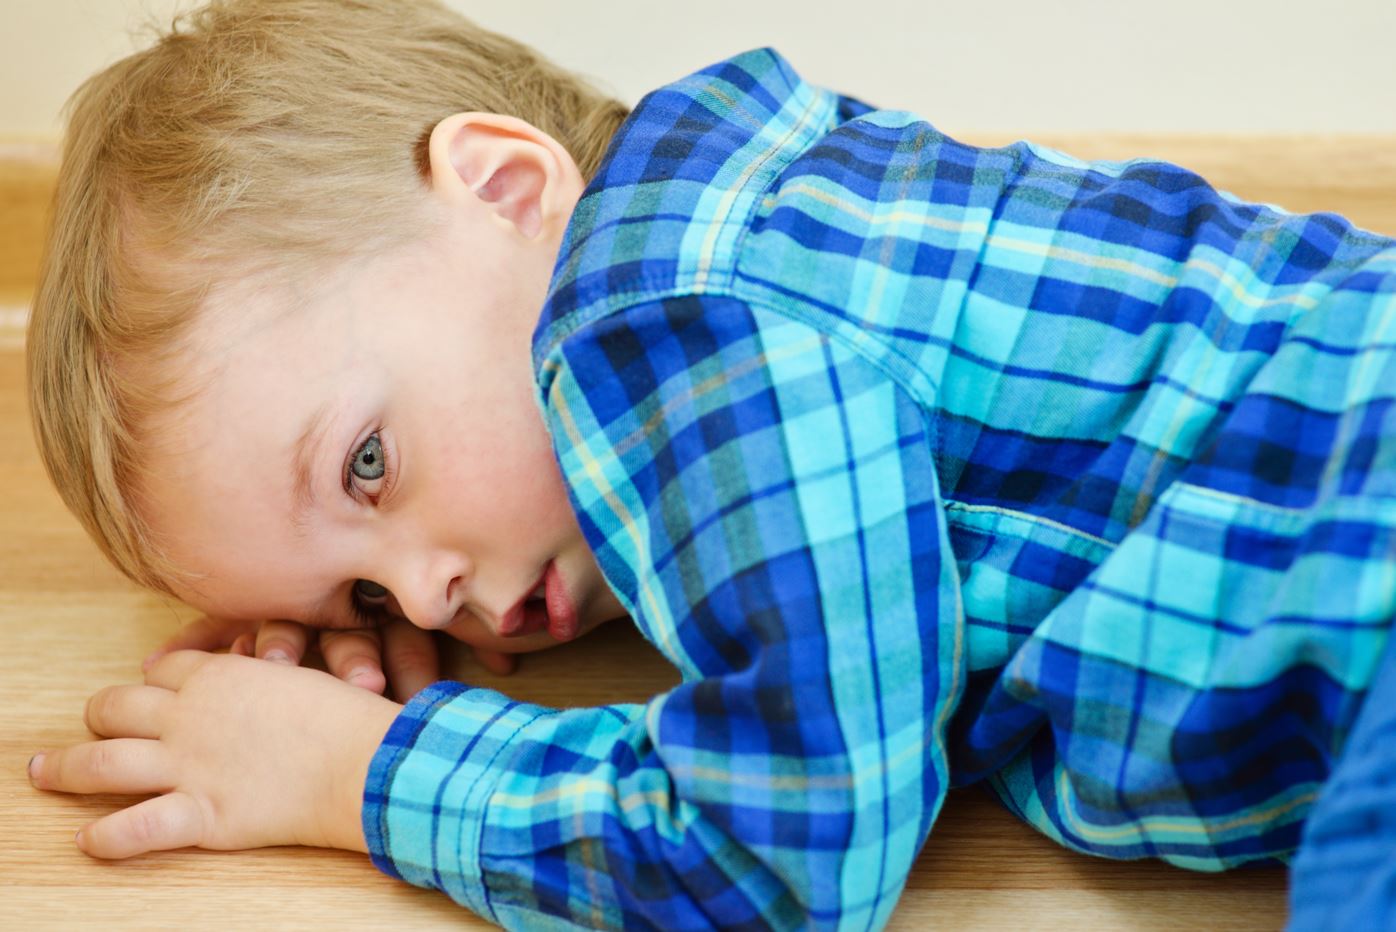 A calm child after a temper tantrum.